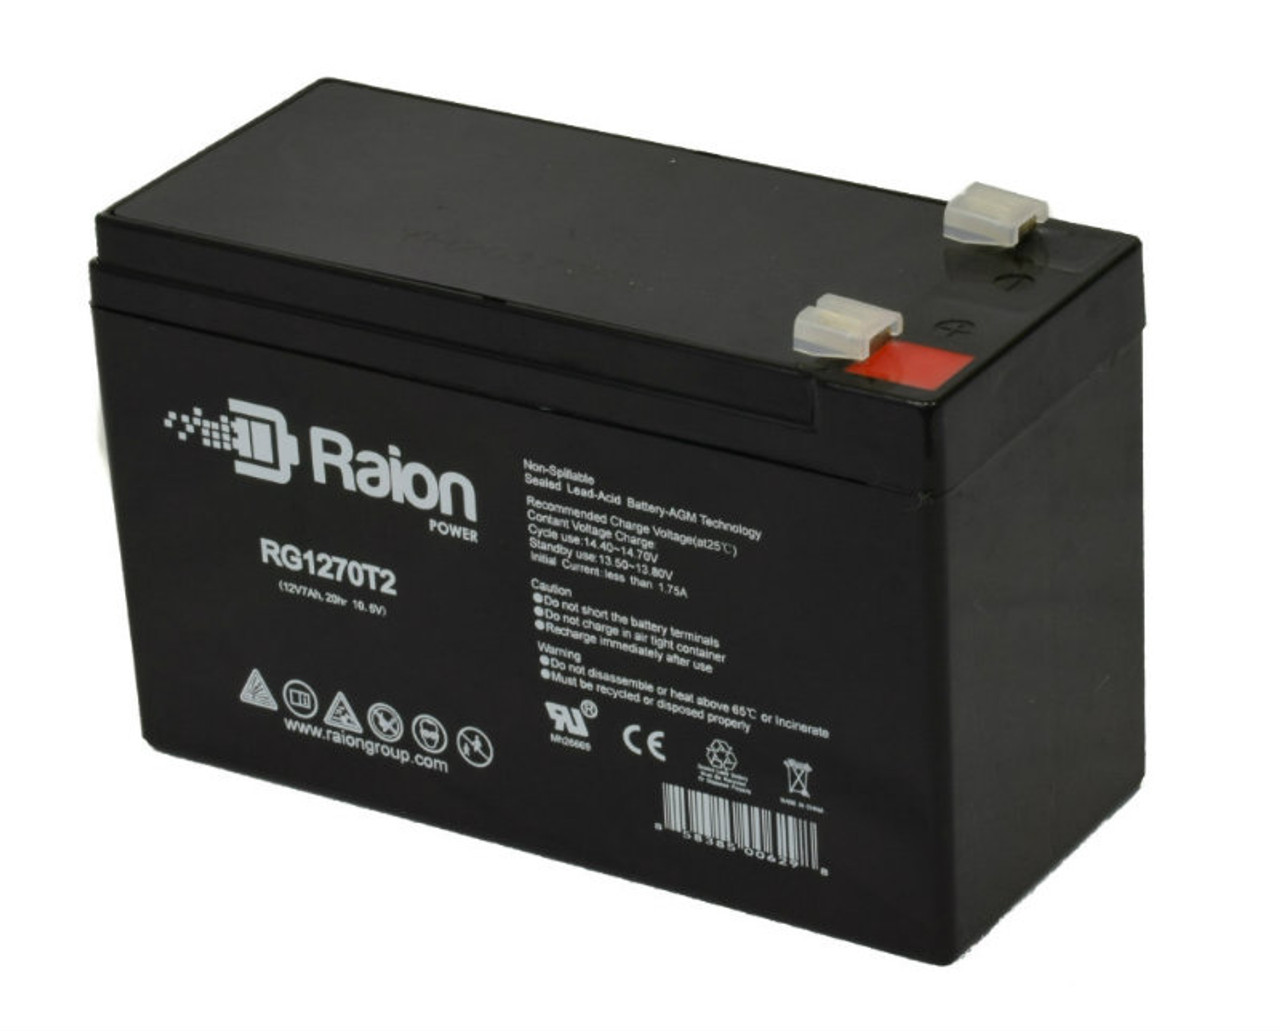 Raion Power RG1270T2 12V 7Ah Lead Acid Battery for Pulse Performance Products Super B